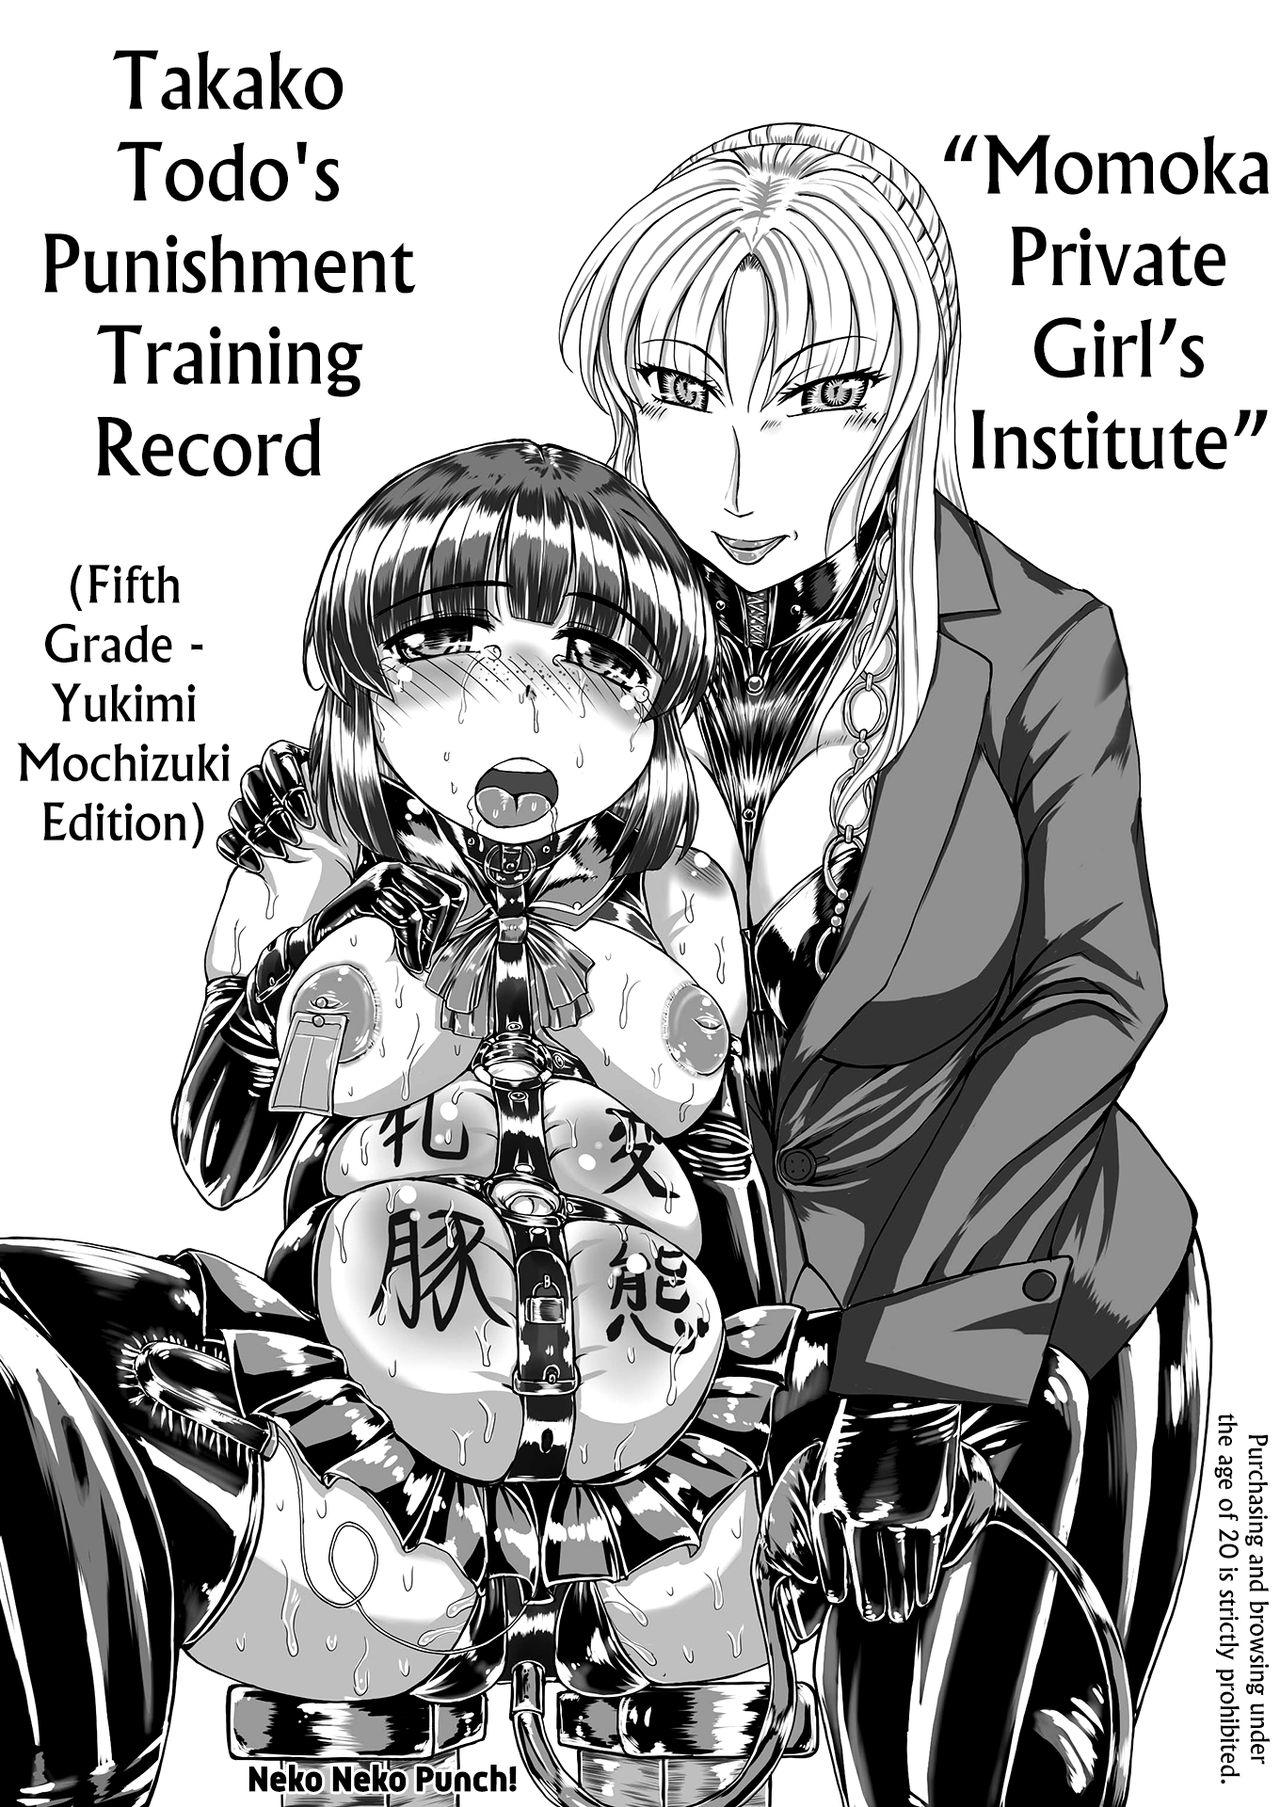 Chichona [Neko Neko Panchu!] [Momoka Private Girls Institute] [Takako Todo's Punishment Training Record] (Fifth Grade - Yukimi Mochizuki Edition) [English] Female Orgasm - Page 1